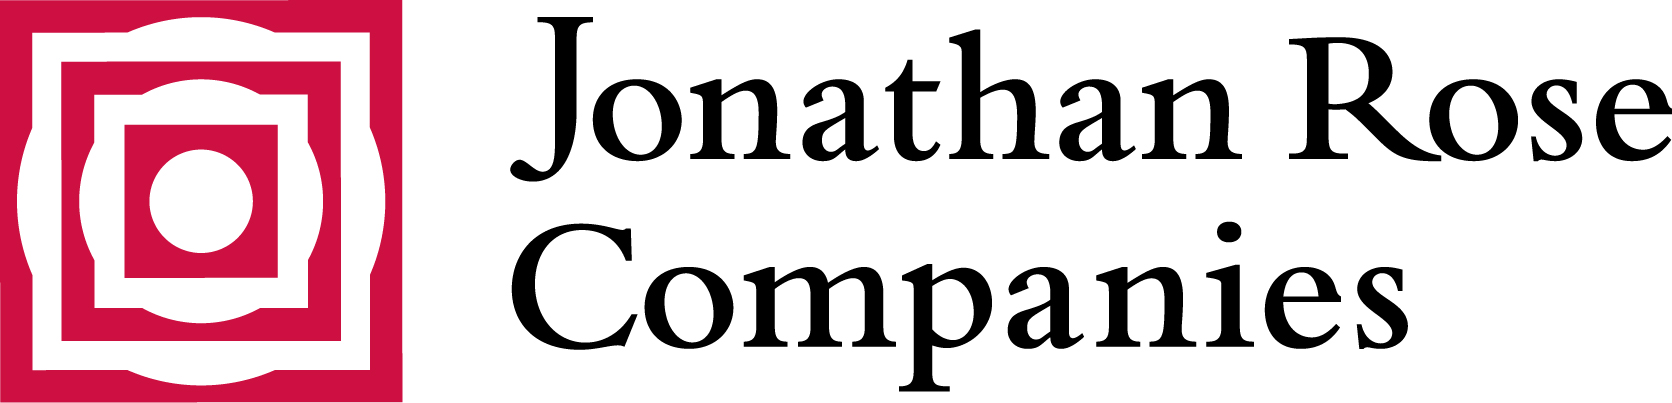 Jonathan Rose Companies logo